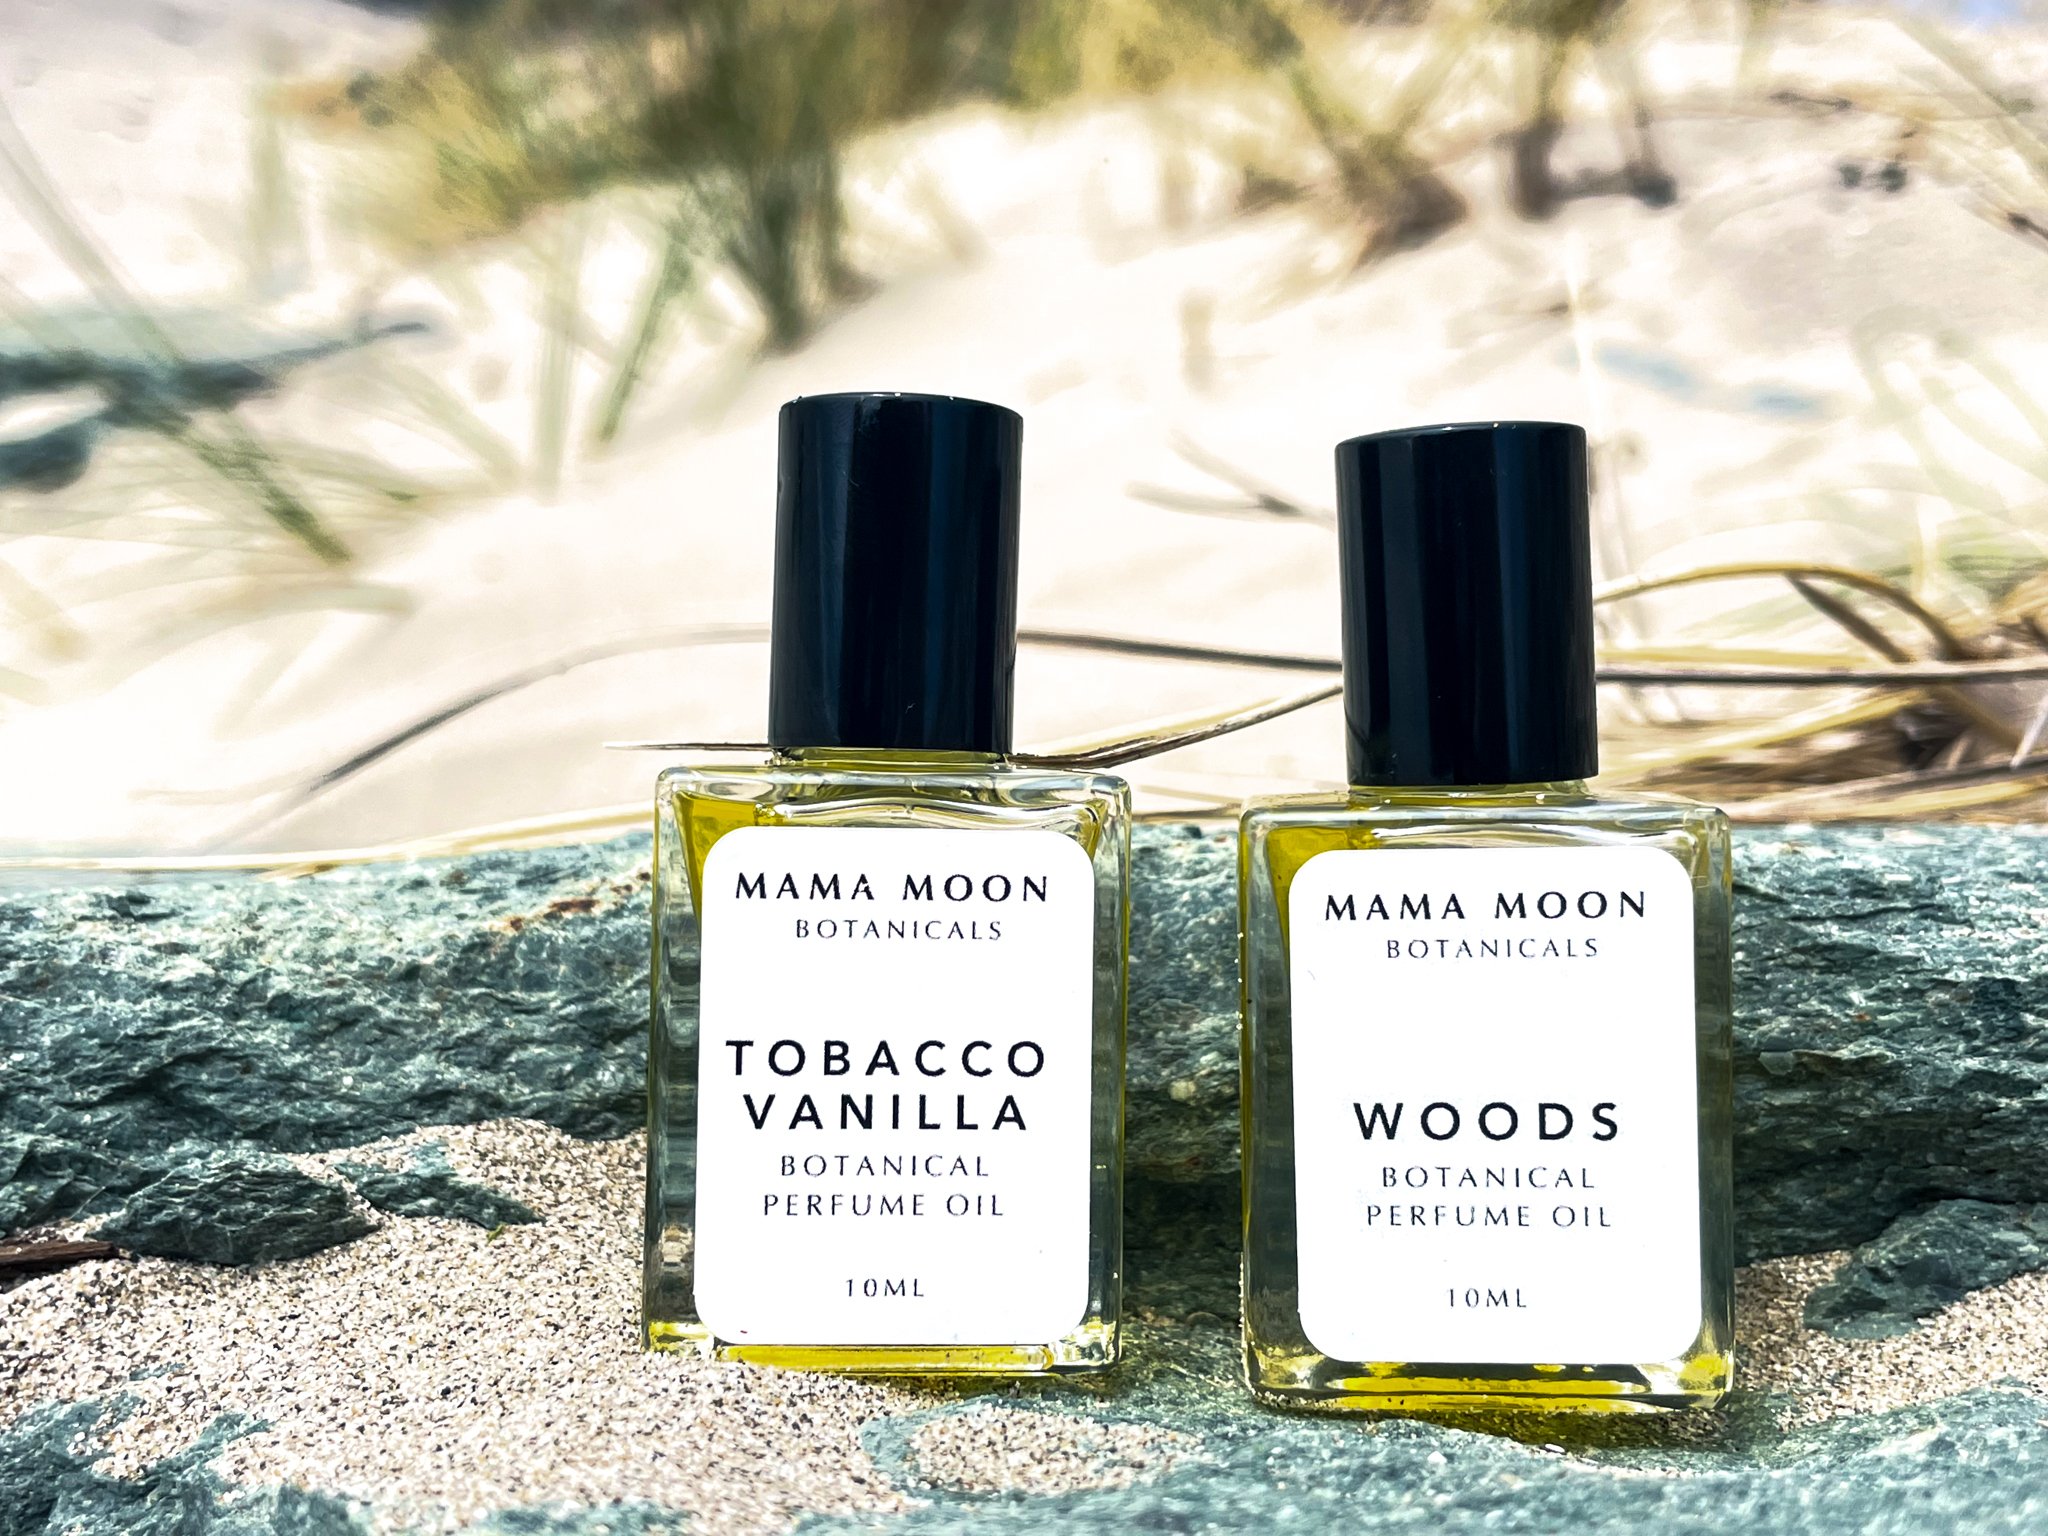 Tobacco and Vanilla Natural Perfume Oil